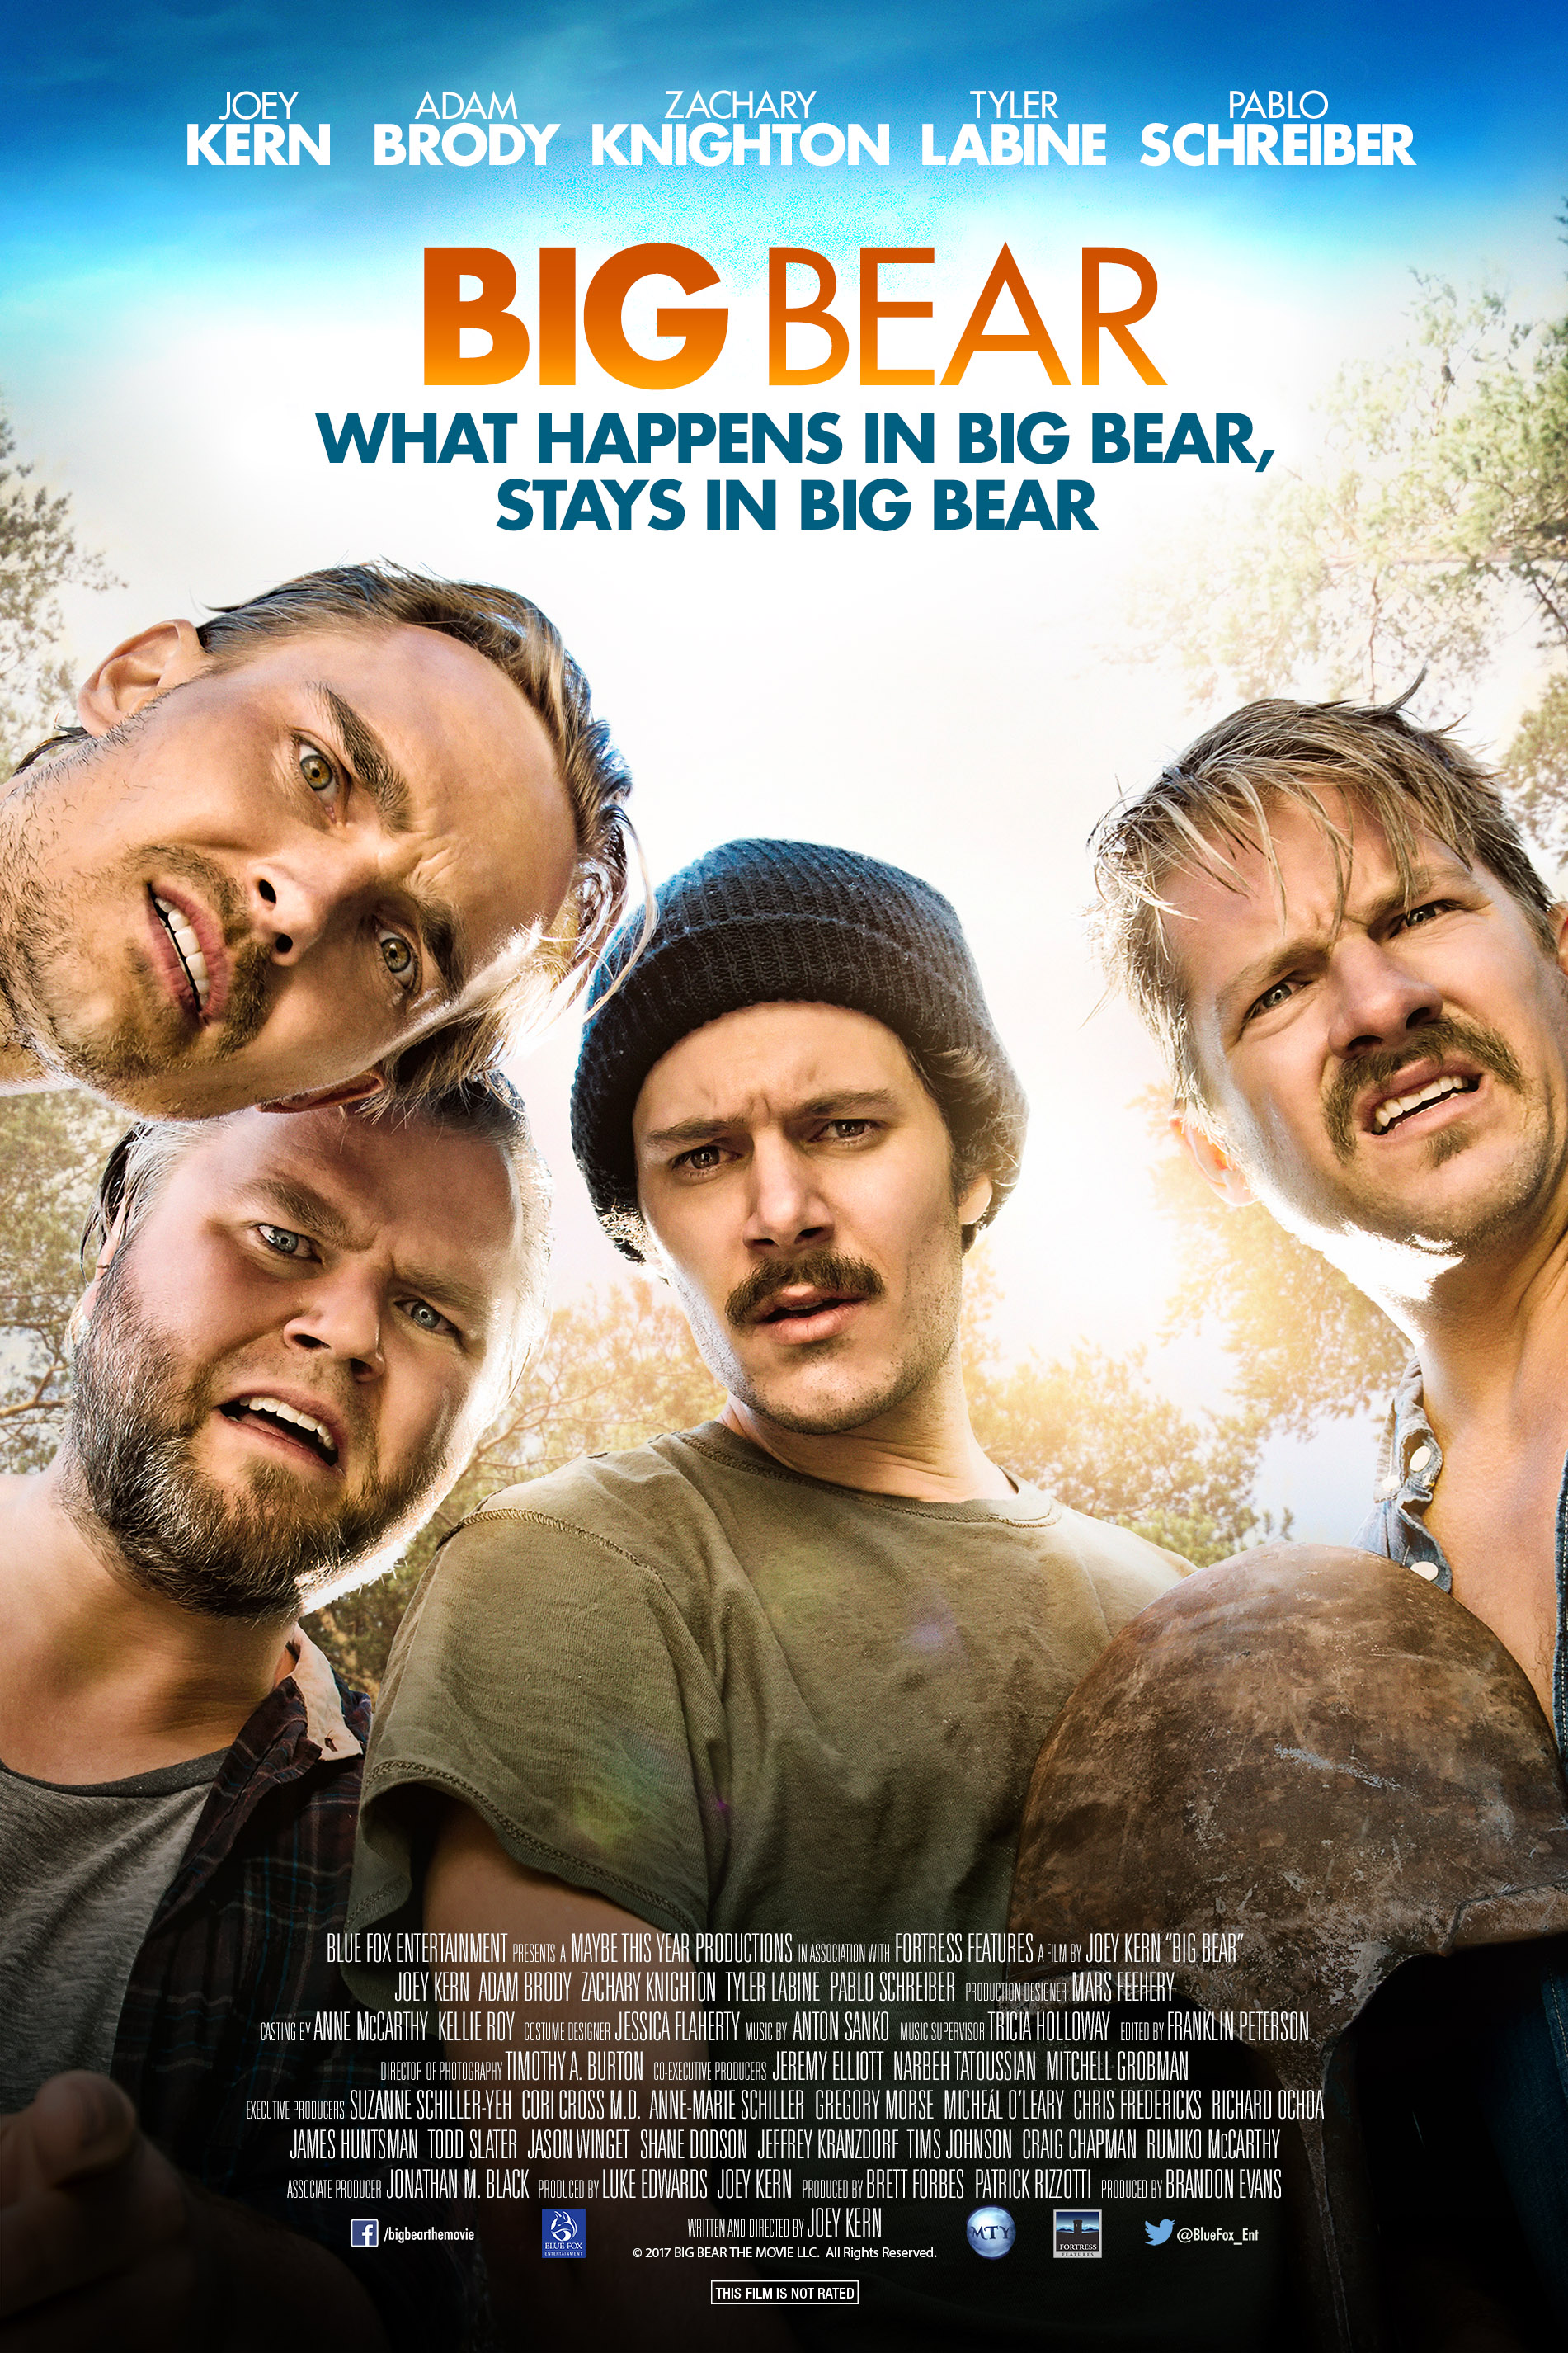 Nonton film Big Bear layarkaca21 indoxx1 ganool online streaming terbaru